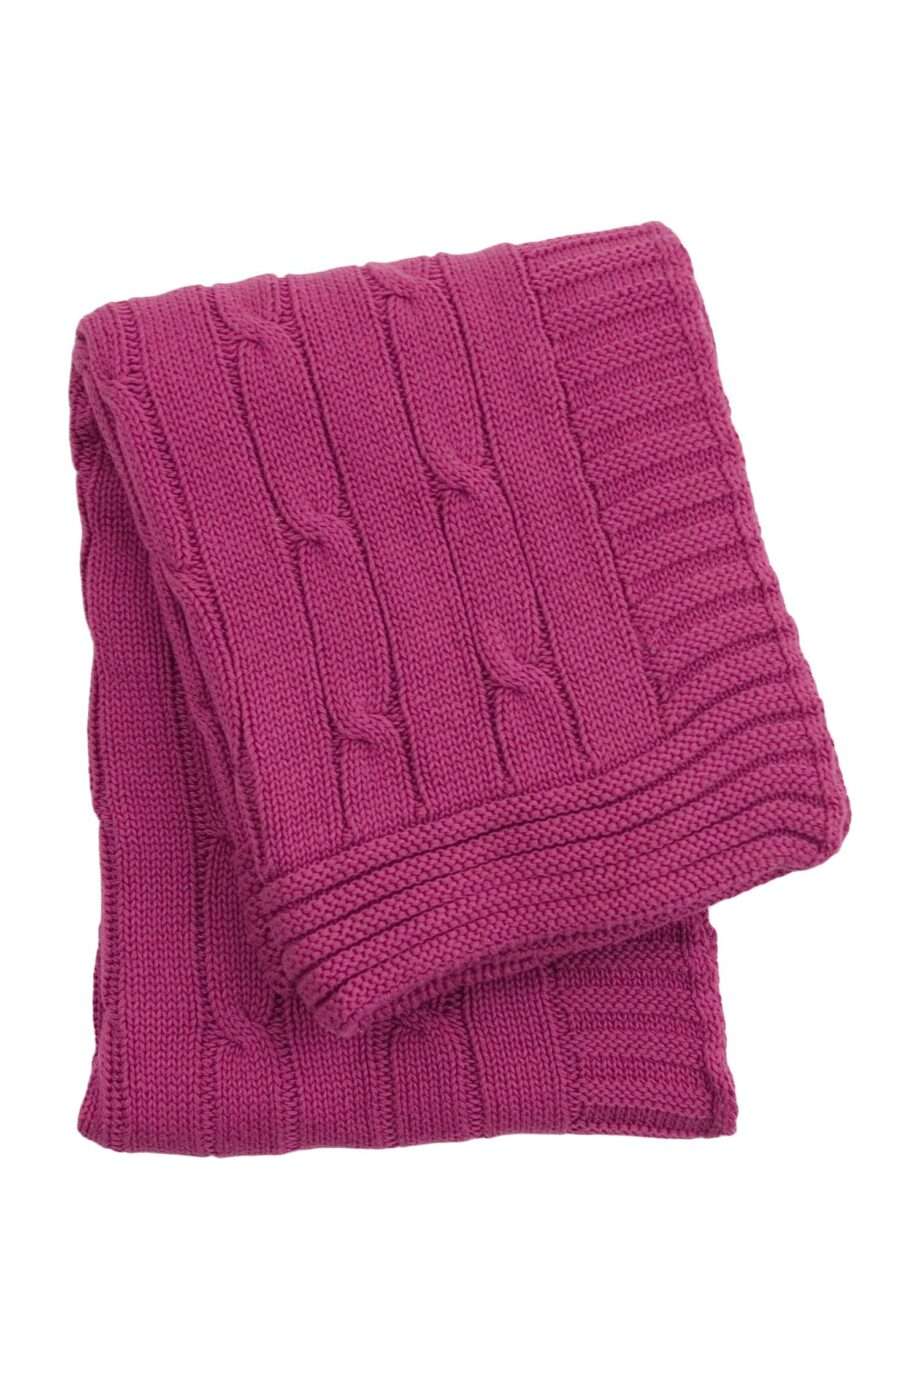 twist fuchsia knitted cotton little blanket small